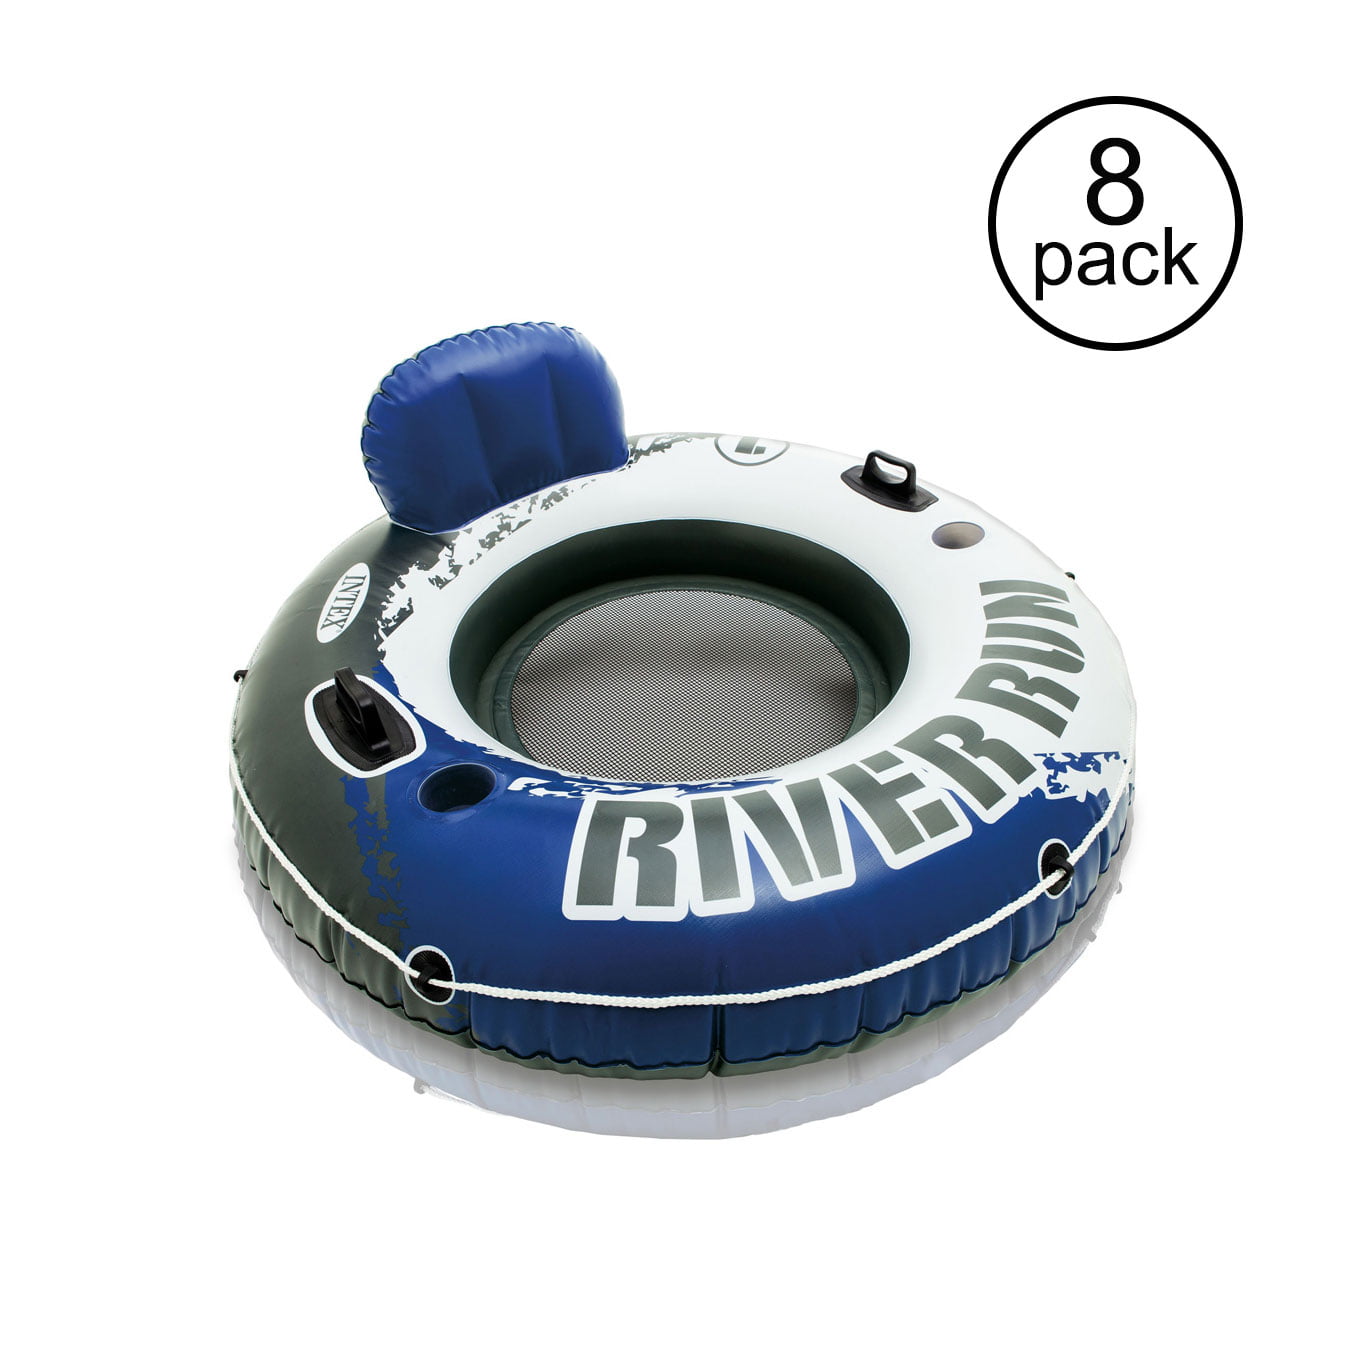 Intex River Run 1 Inflatable Floating Tube RaftOpen Box 4 